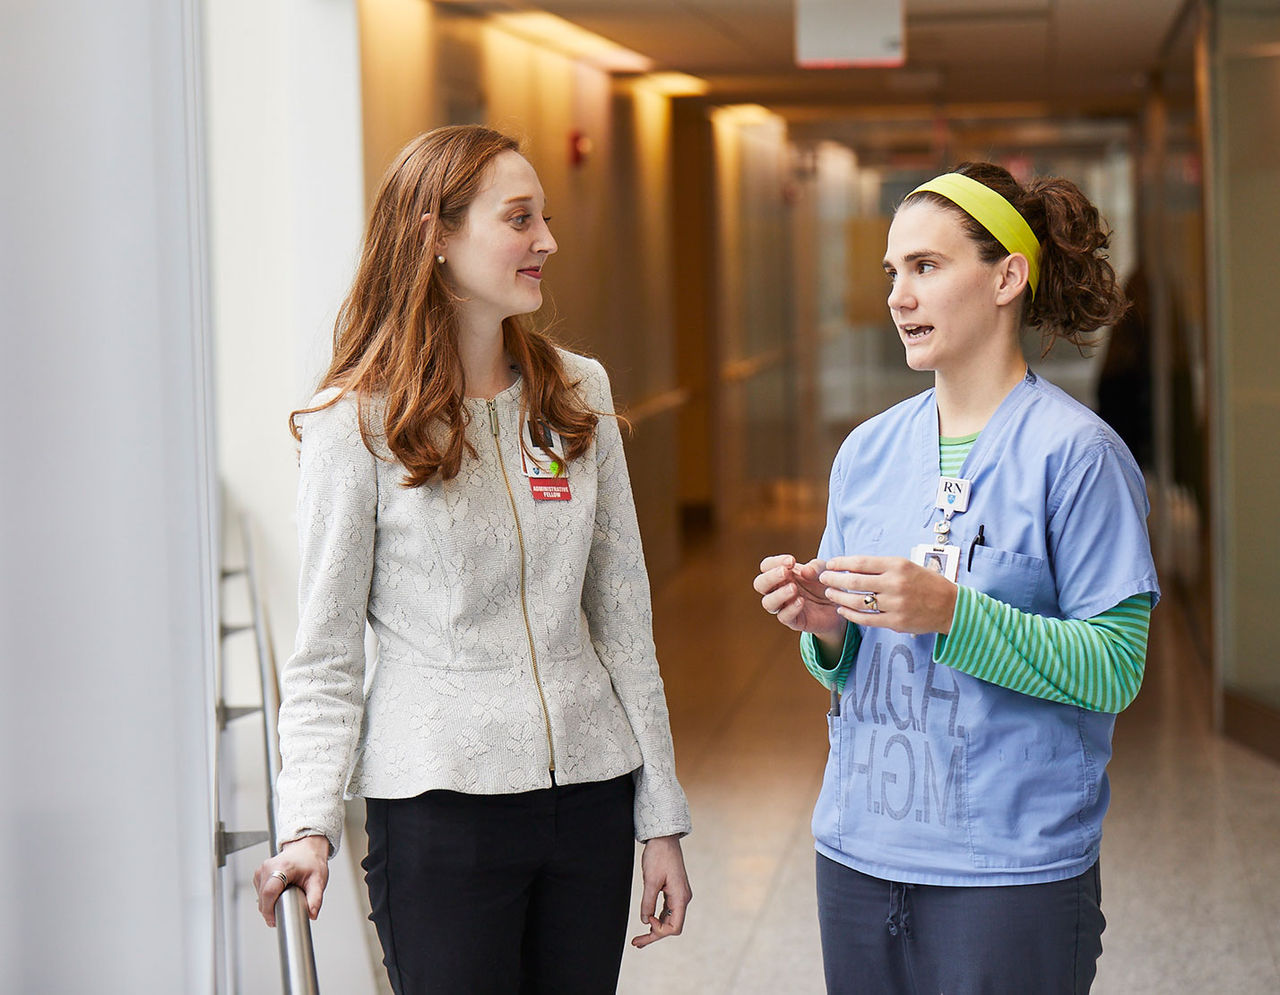 administative fellow and nurse talking in hallway